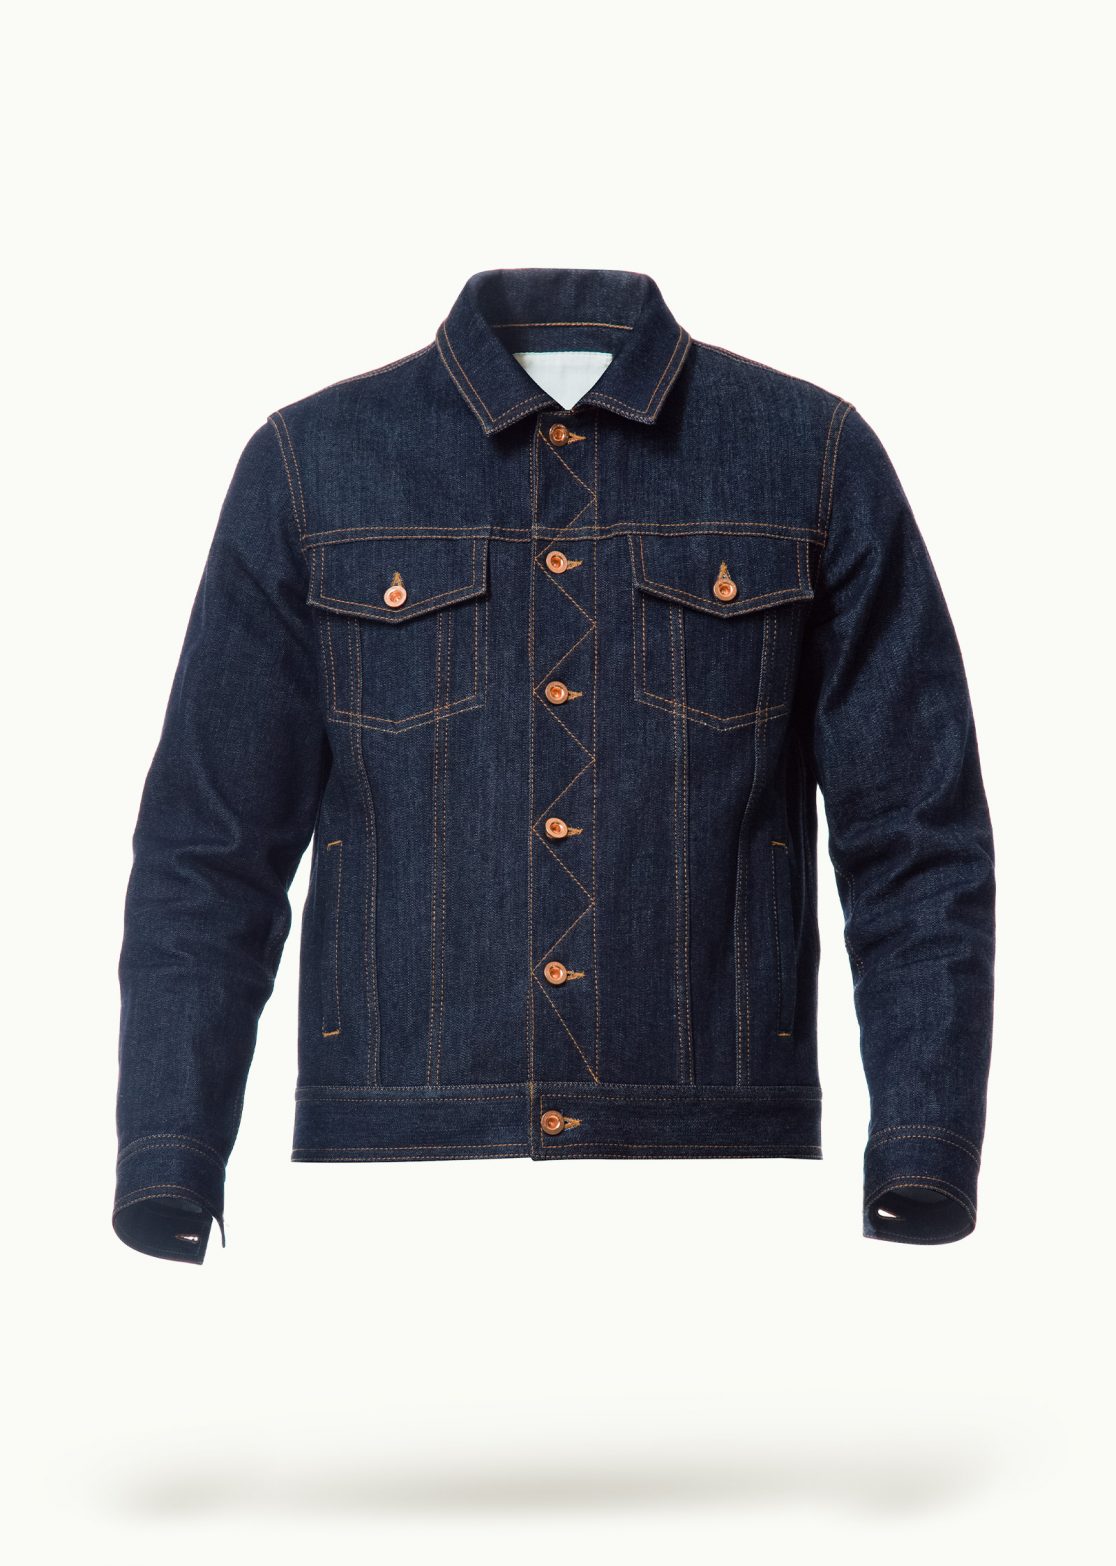 SALE - Men - Jackets - Denim - Outerwear - Clyde Denim Jacket 13oz Image Primary